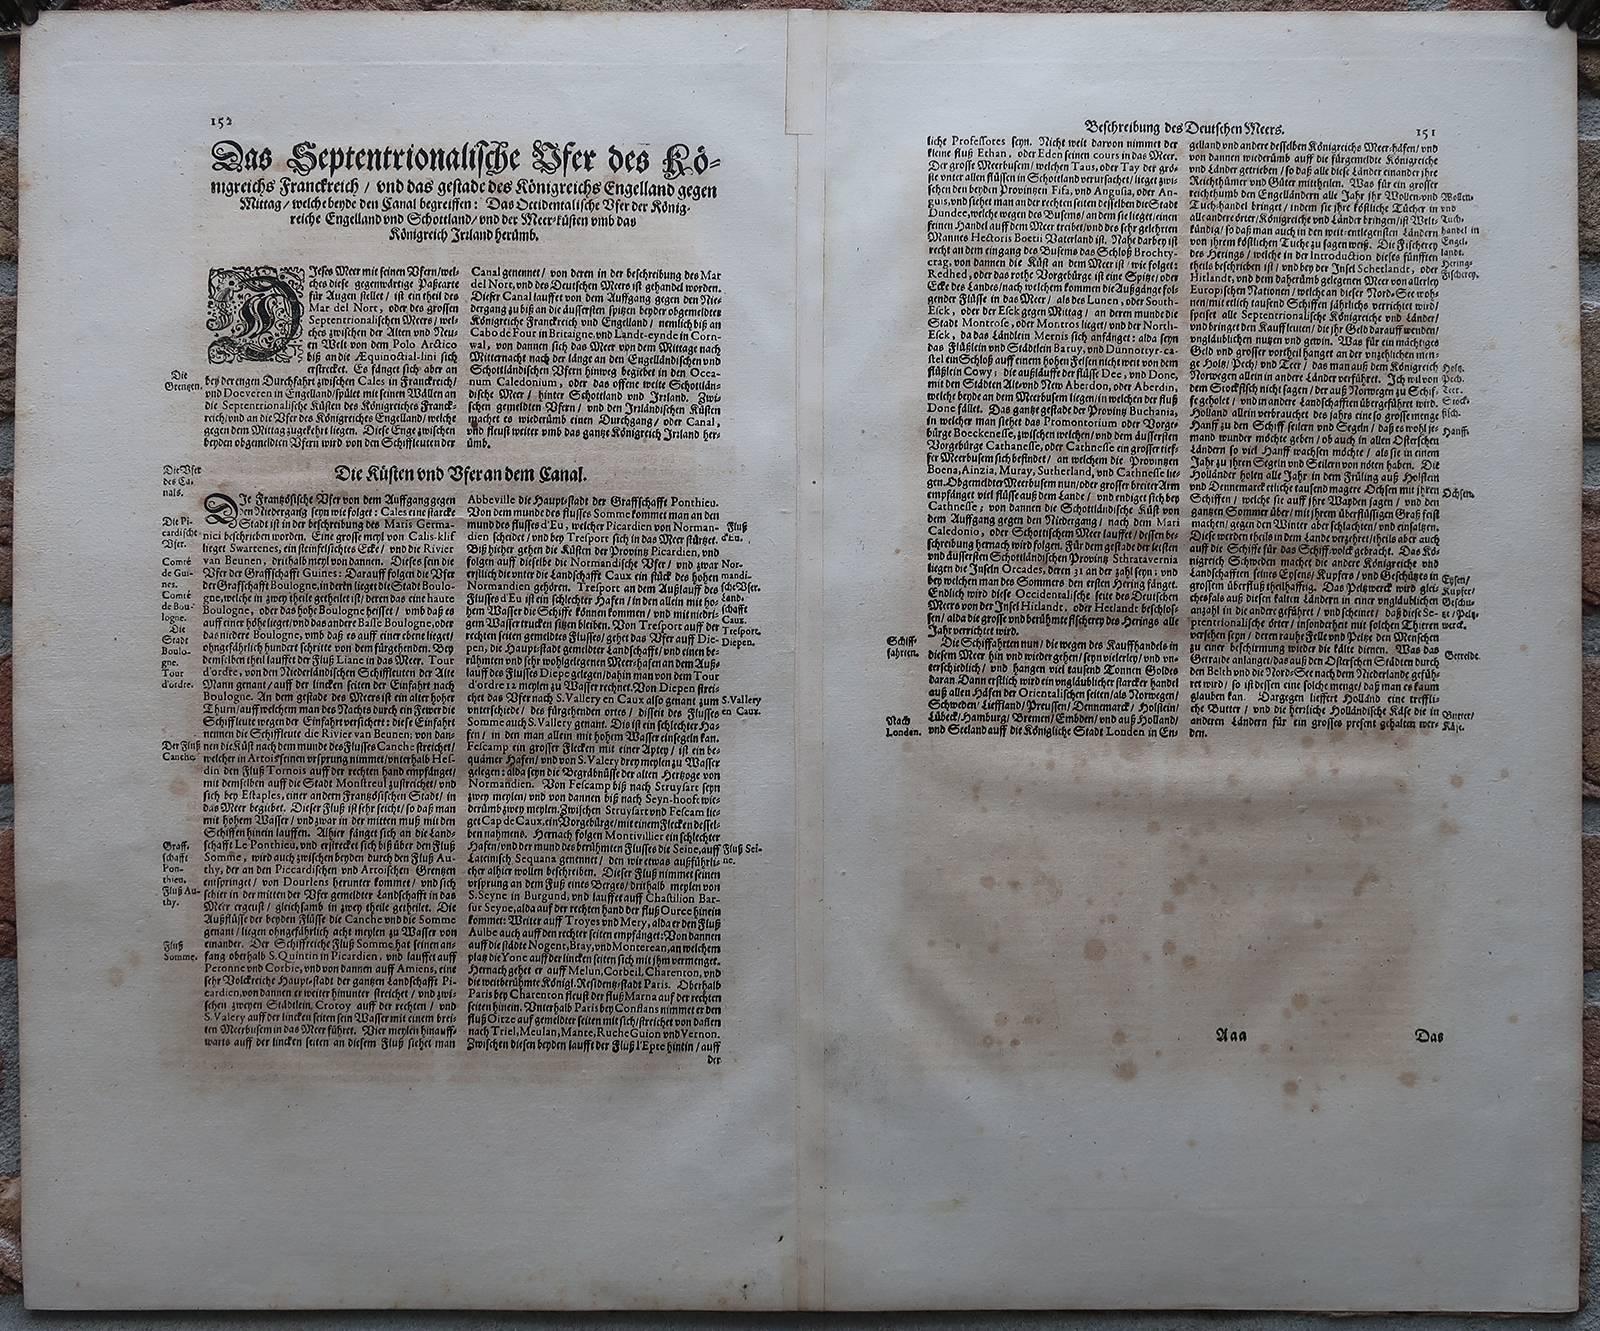 Pascaart vant Canaal Tusschen Engelant en Vrancryck [...]. - Print by Johannes Janssonius